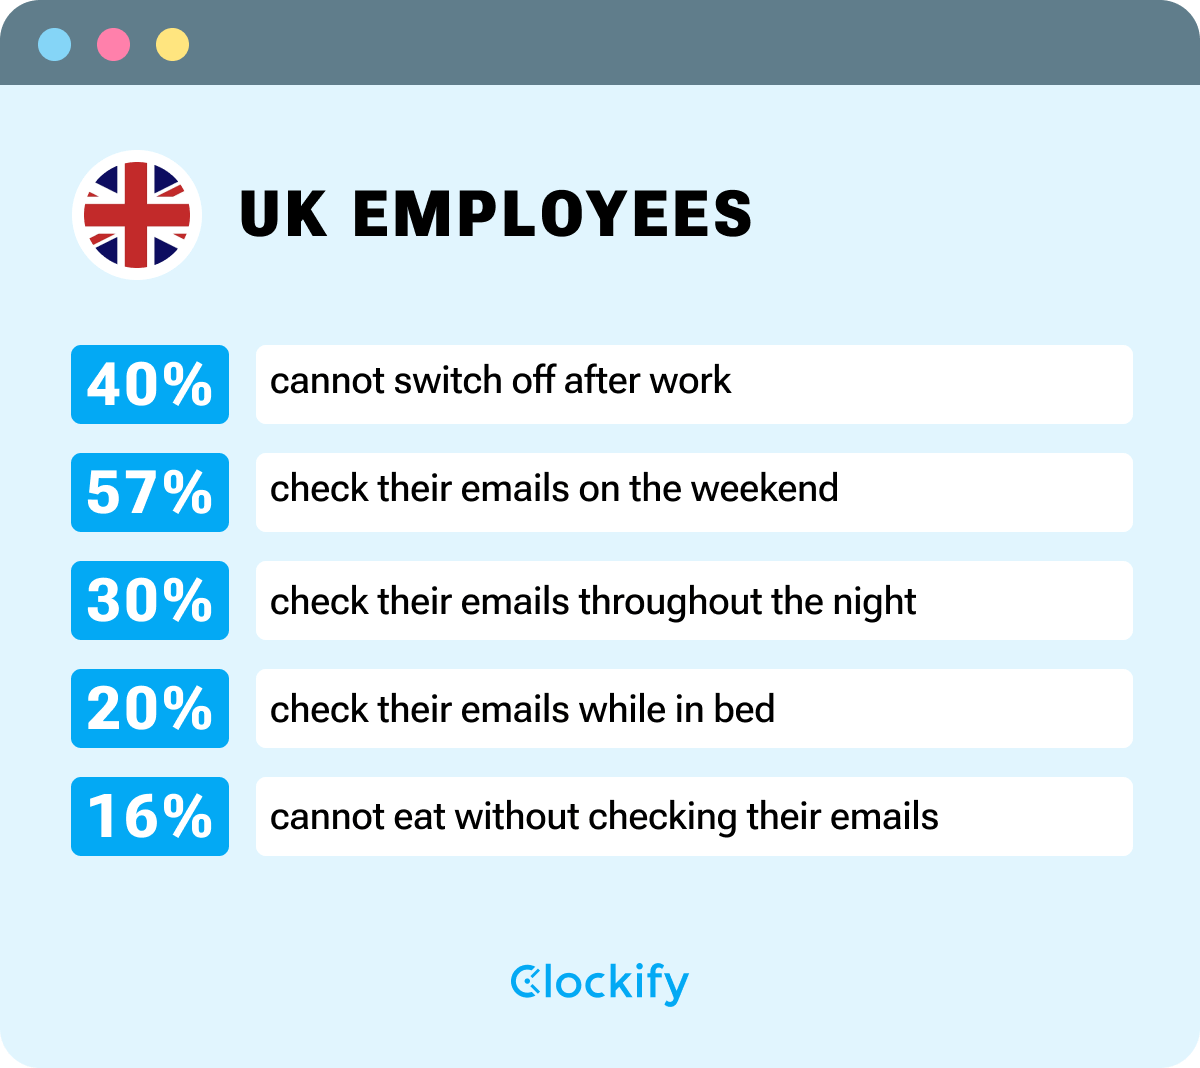 UK employees - infographic